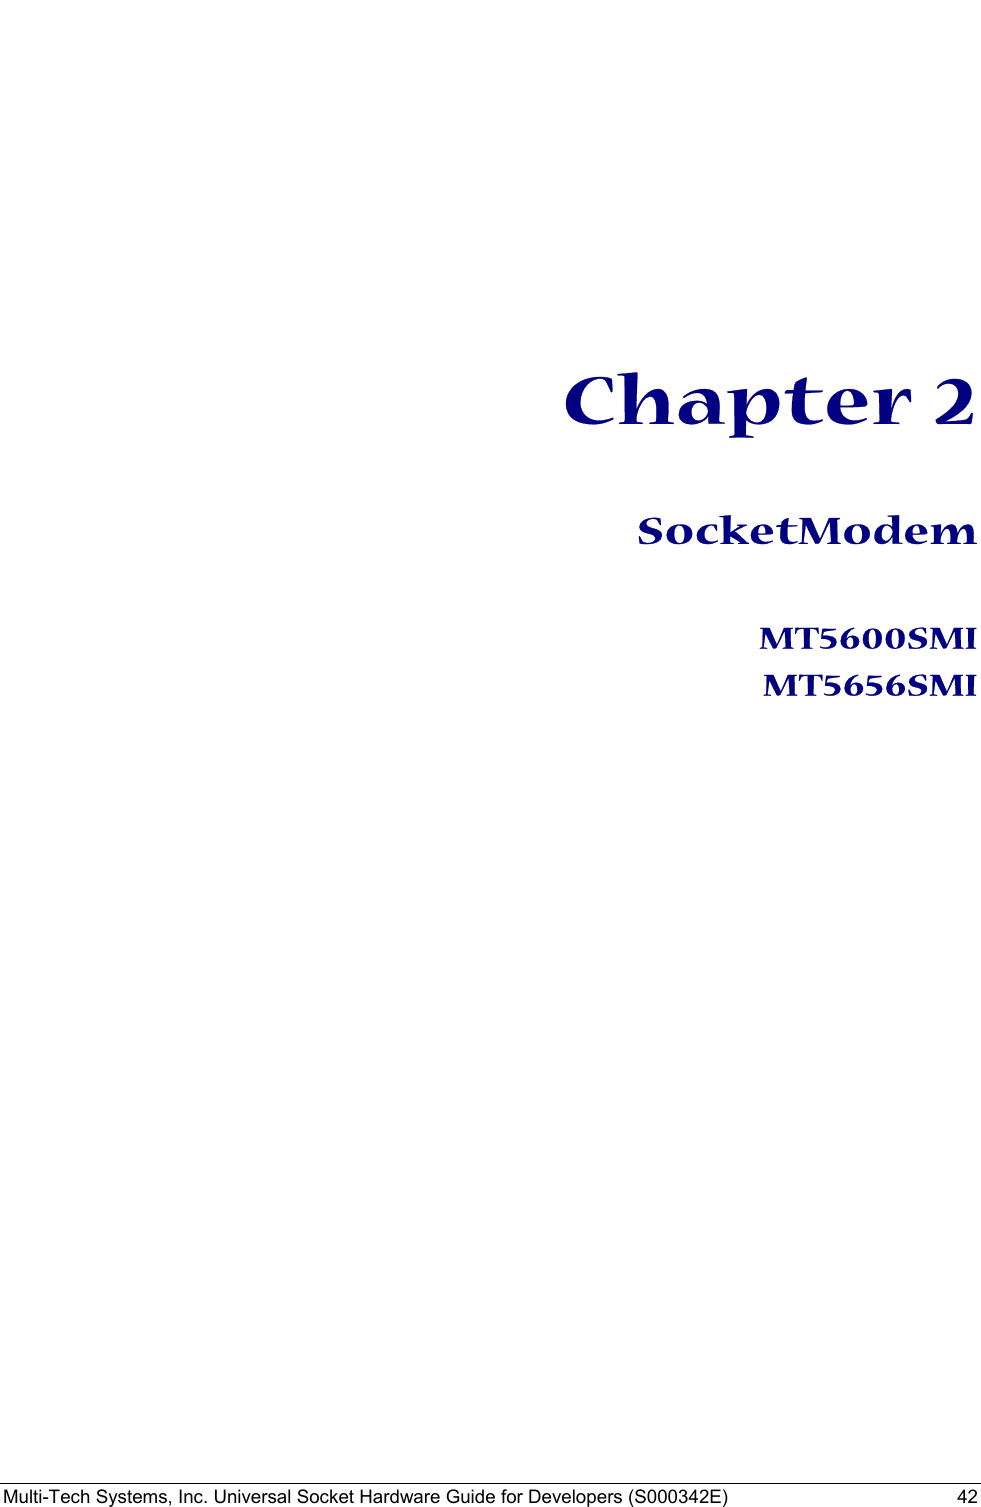  Multi-Tech Systems, Inc. Universal Socket Hardware Guide for Developers (S000342E)  42         Chapter 2  SocketModem  MT5600SMI  MT5656SMI    